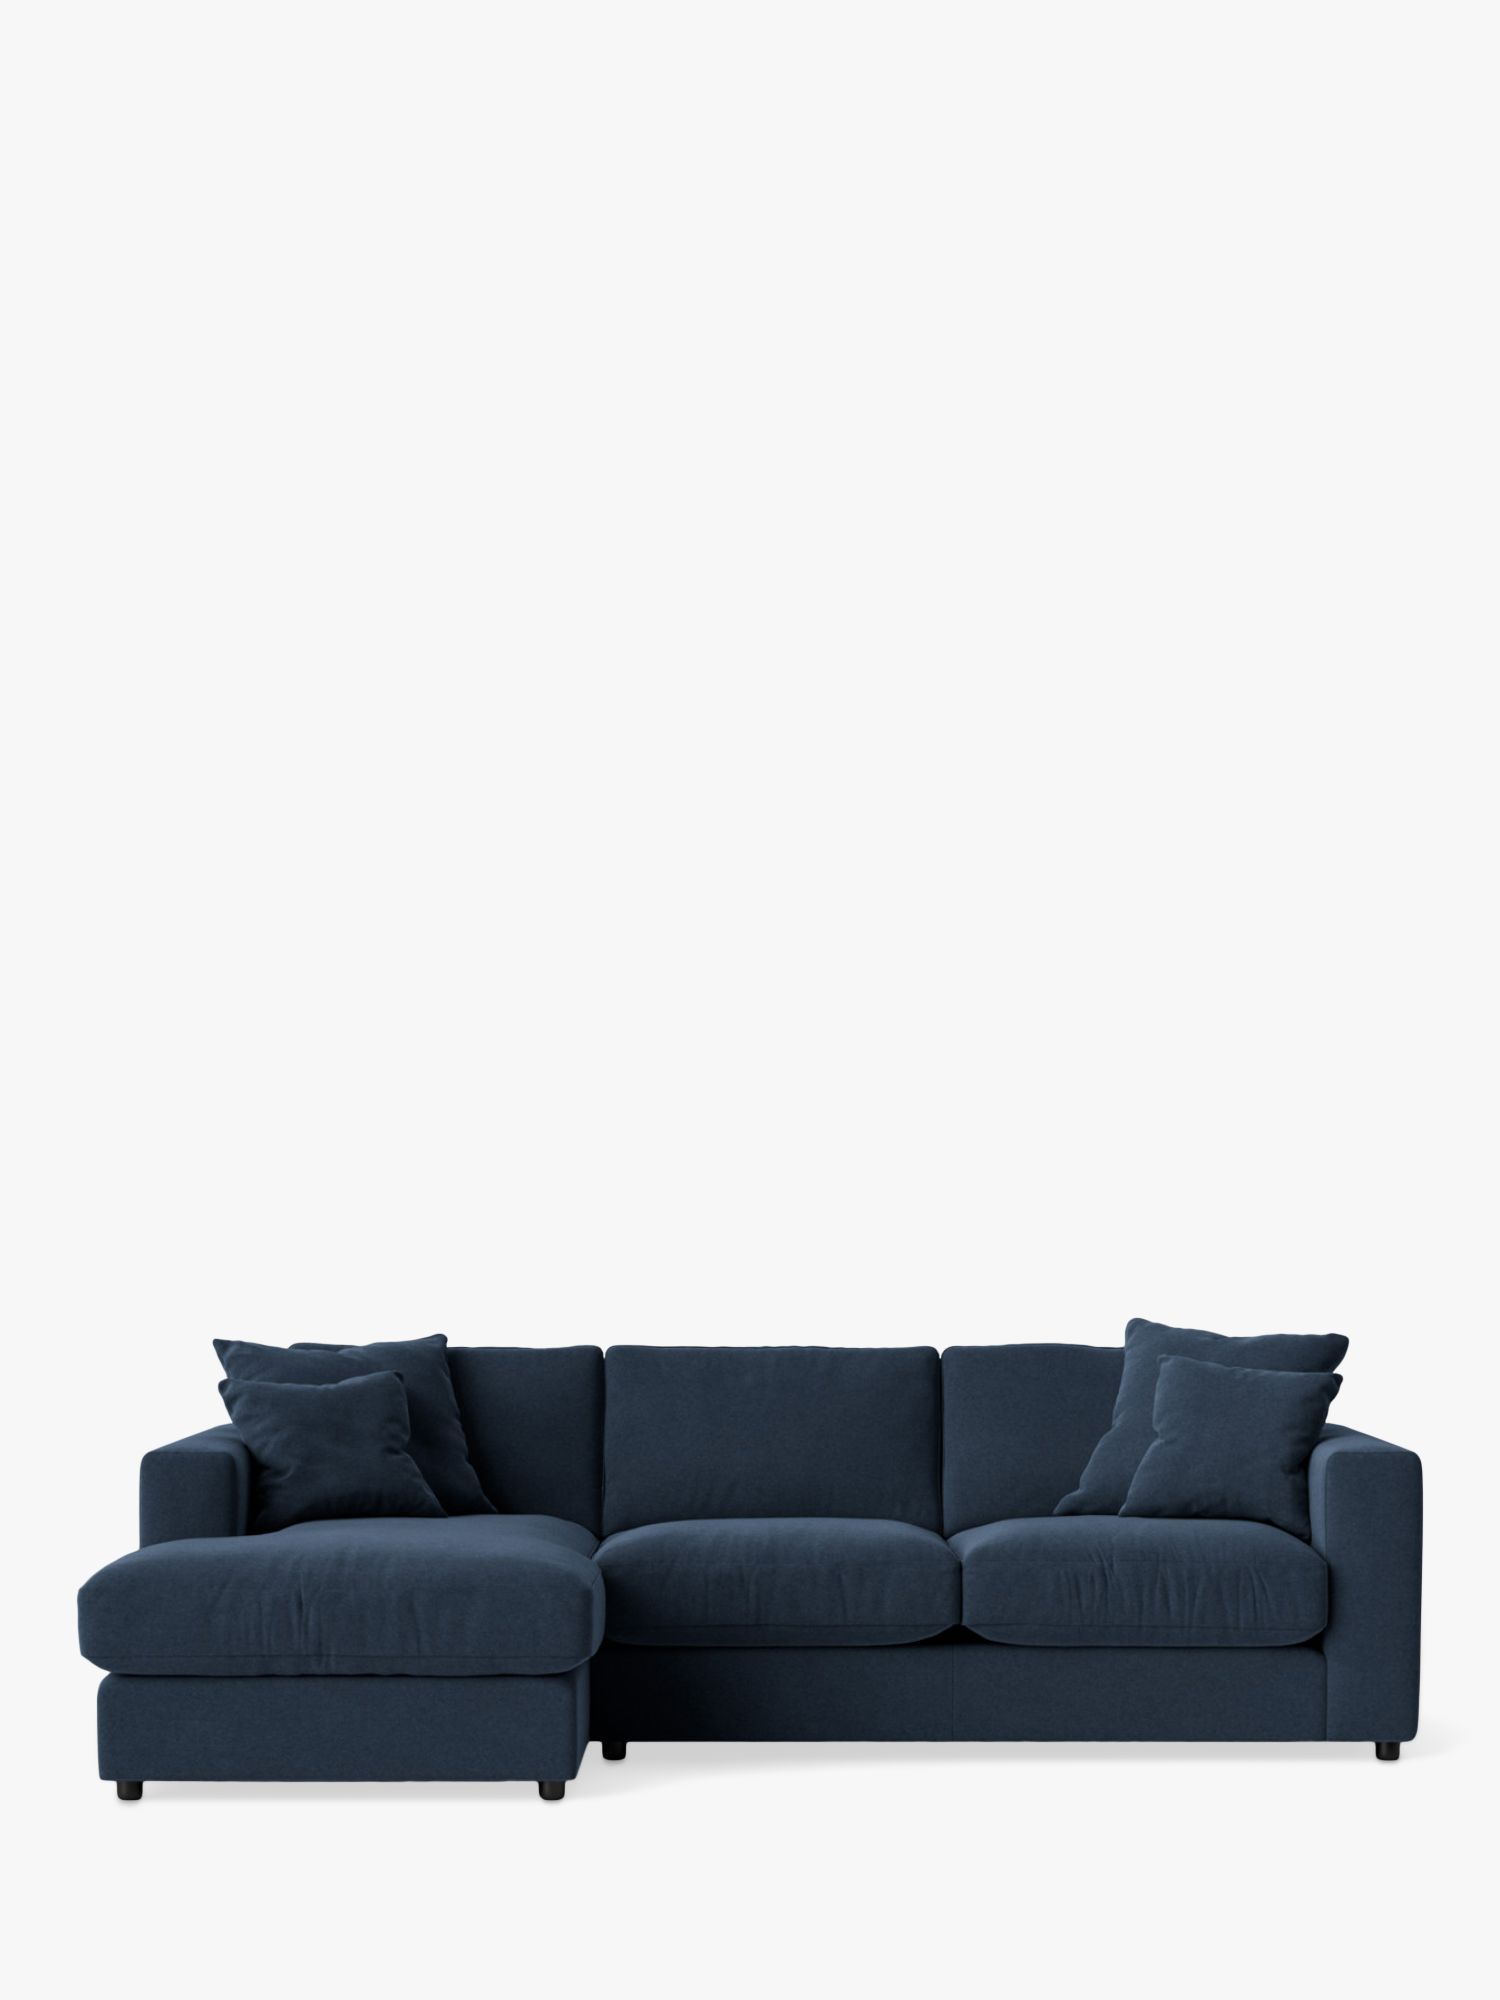 Althaea Range, Swoon Althaea Grand 4 Seater LHF Corner Sofa, Smart Wool Indigo